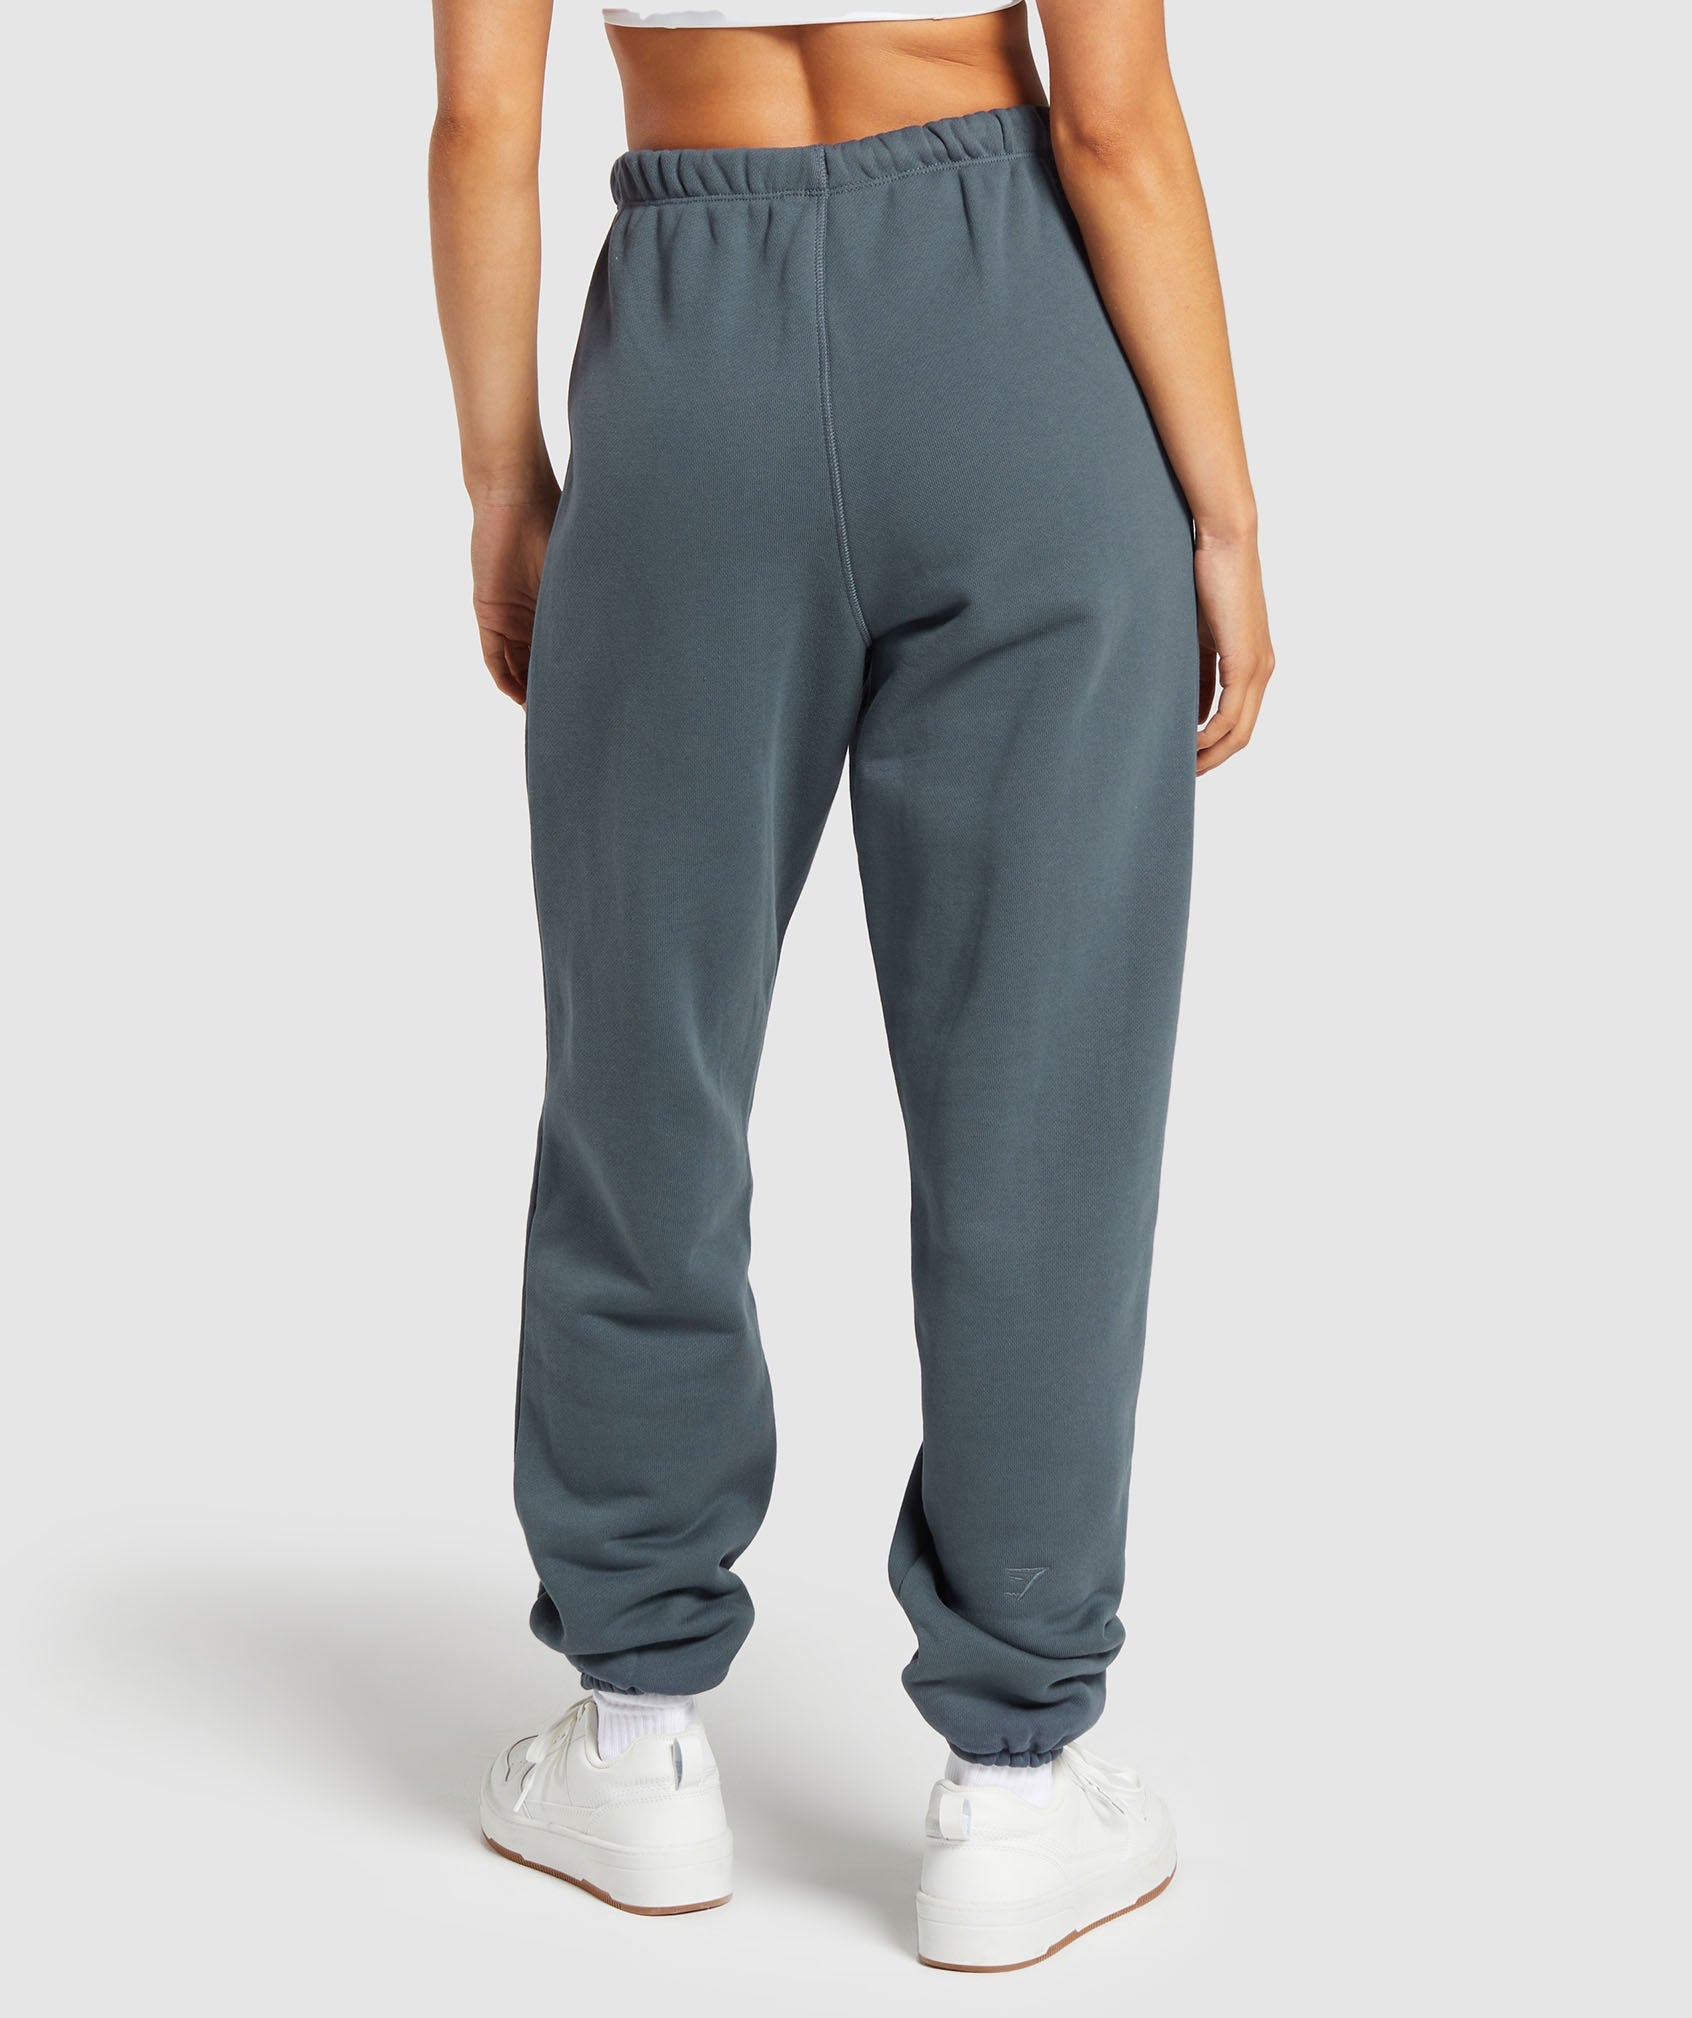 Nike / Women's Trend Essential Fleece Pants